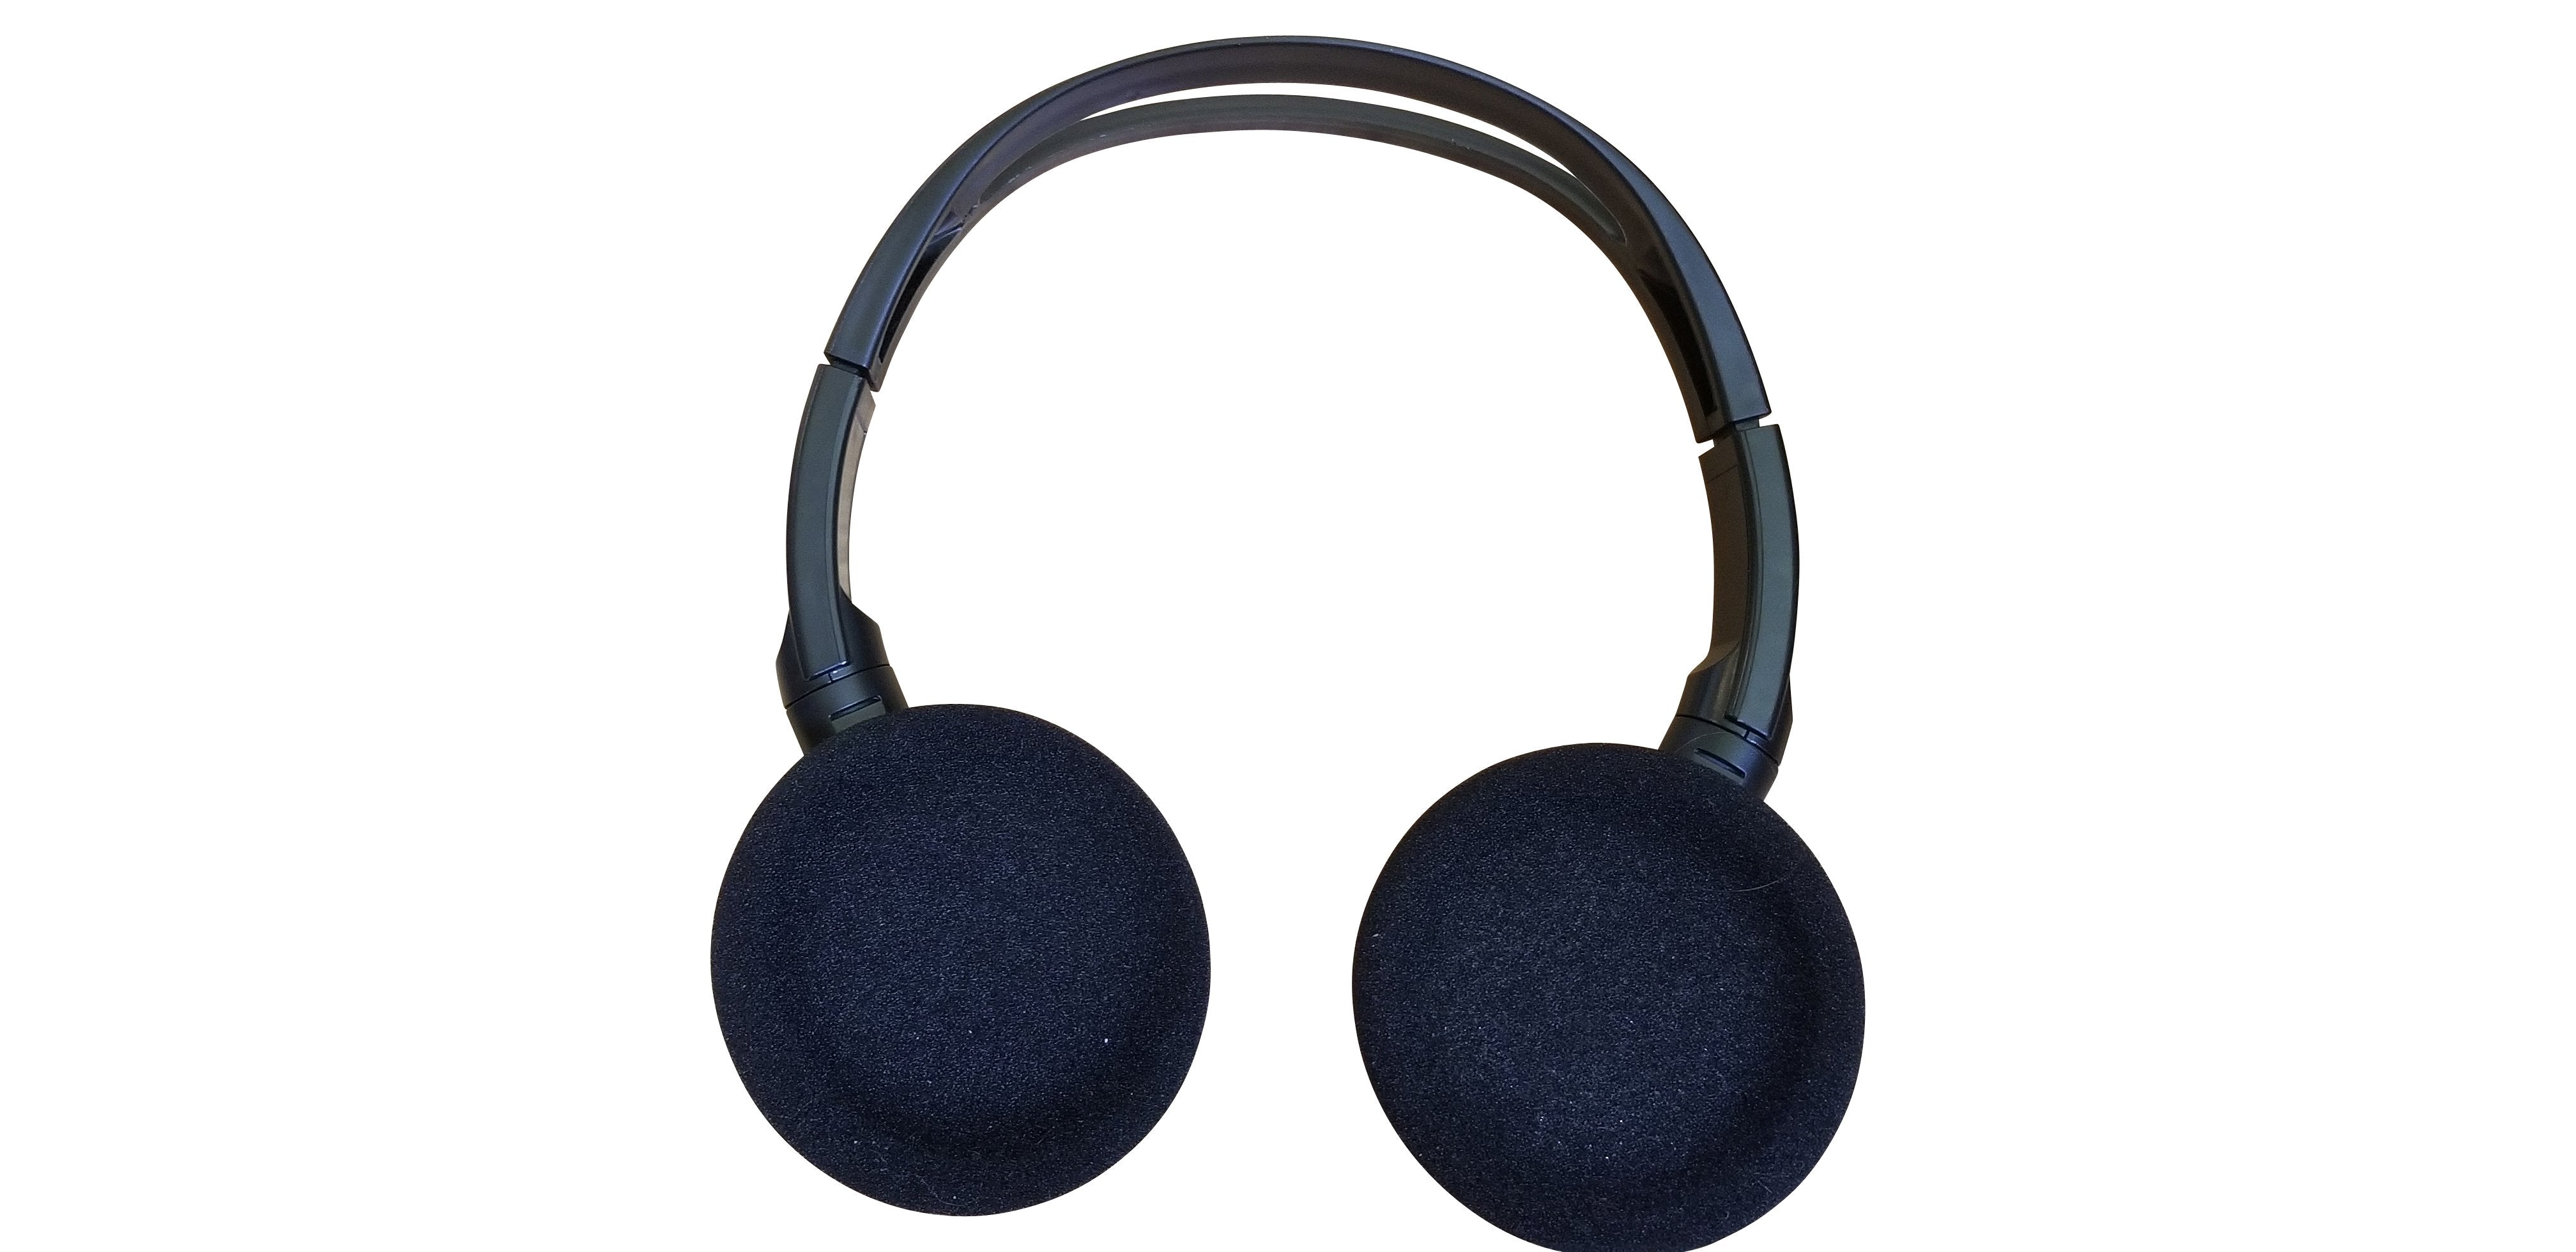 2014 Infiniti QX50 Wireless DVD Headphone